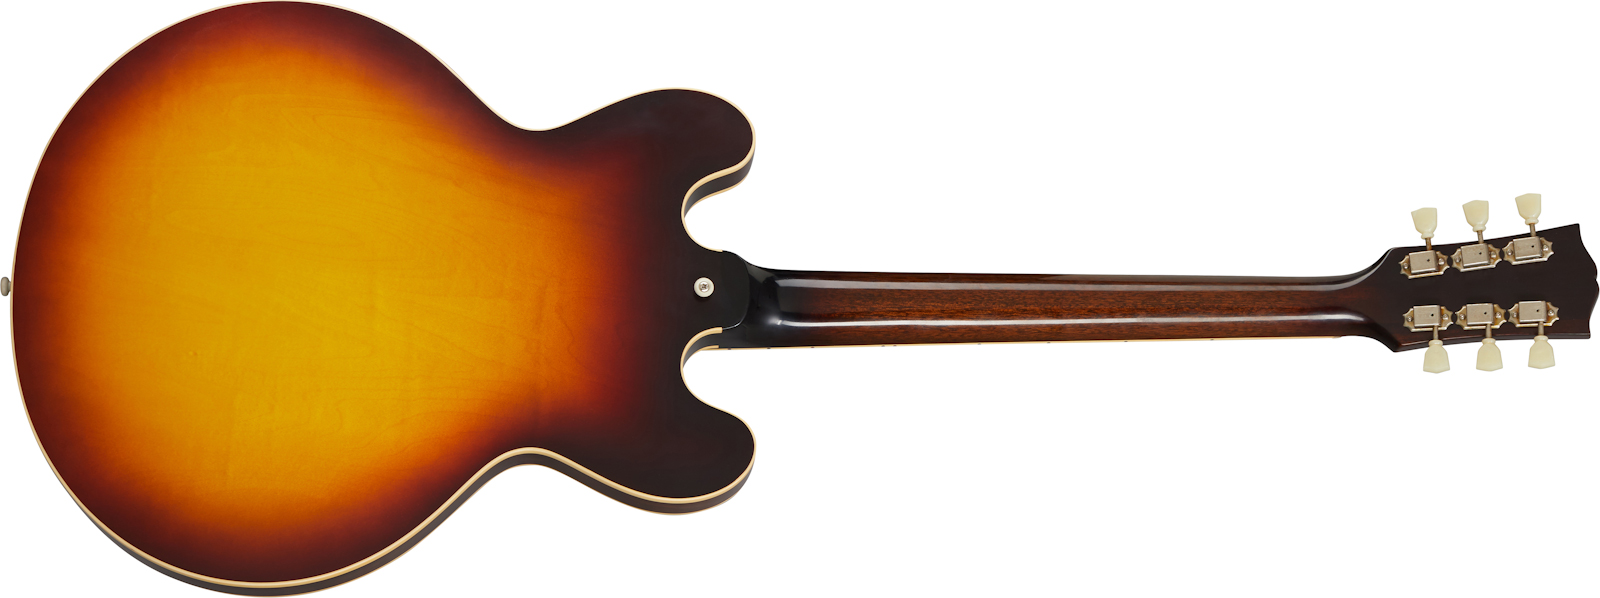 Gibson Custom Shop Historic Es335 Reissue 1959 2h Ht Rw - Vintage Burst - Semi-hollow electric guitar - Variation 1